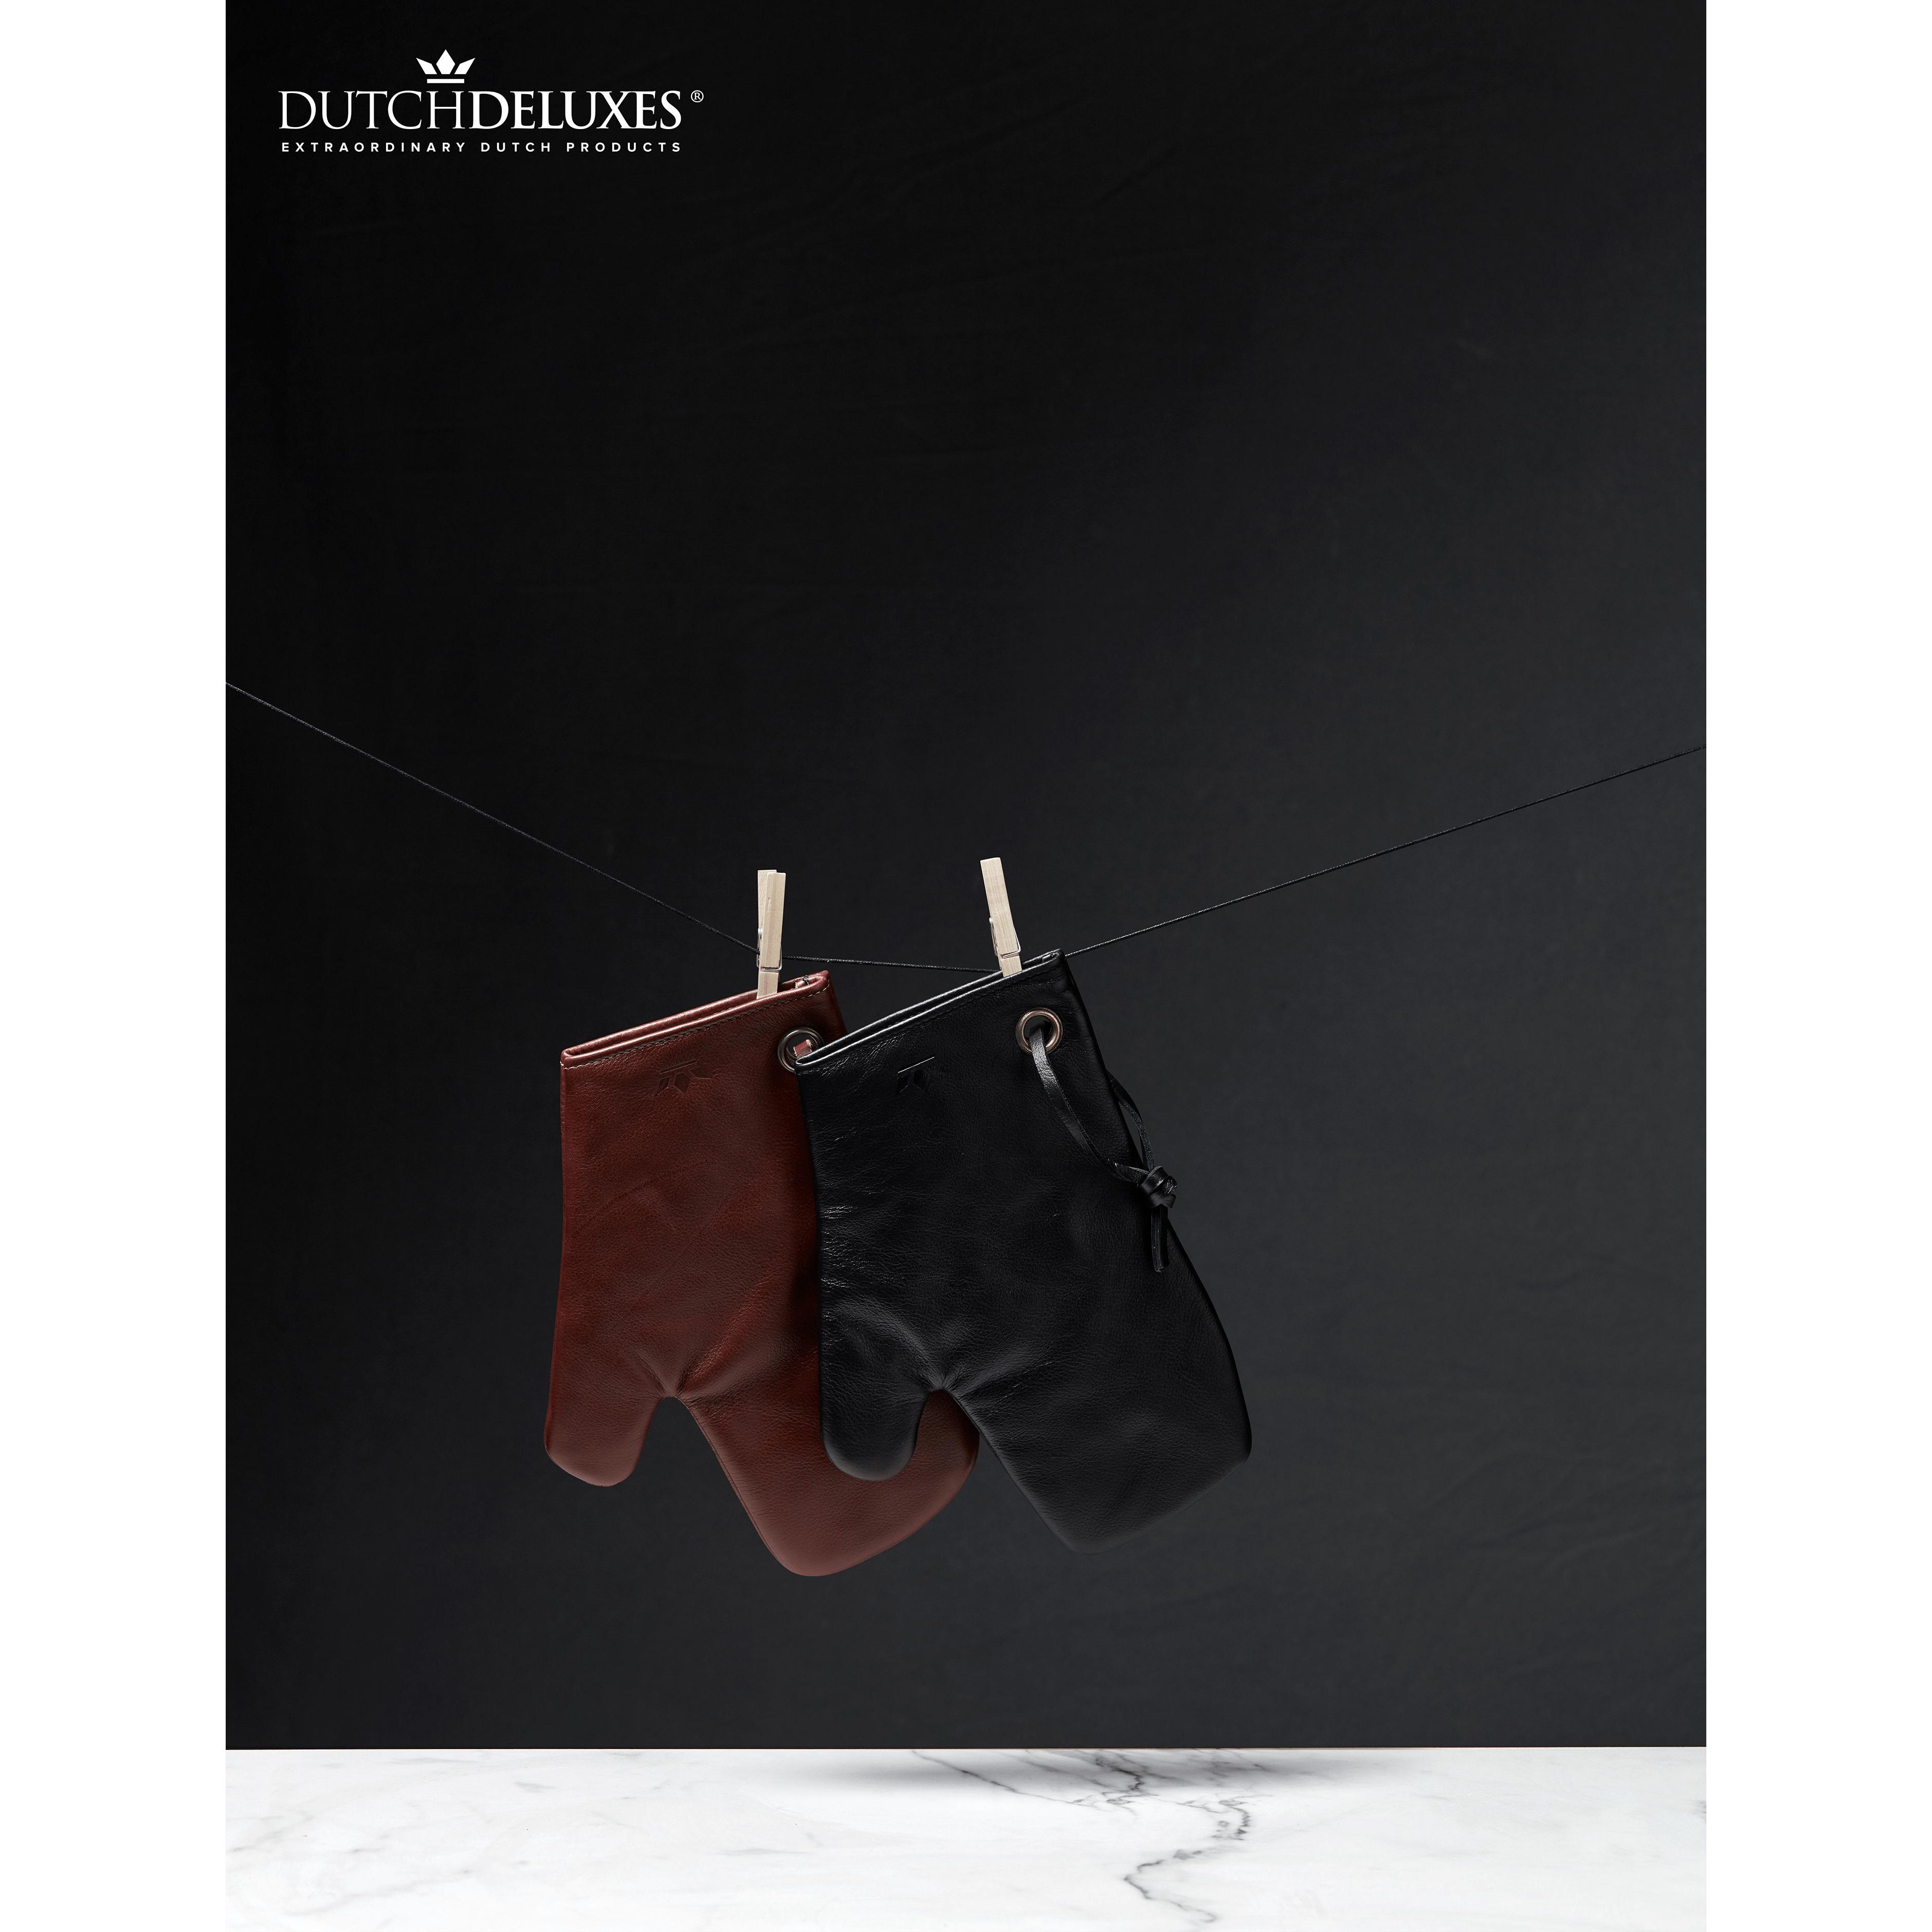 DutchDeluxes Pot Glove Classic Leather, černá